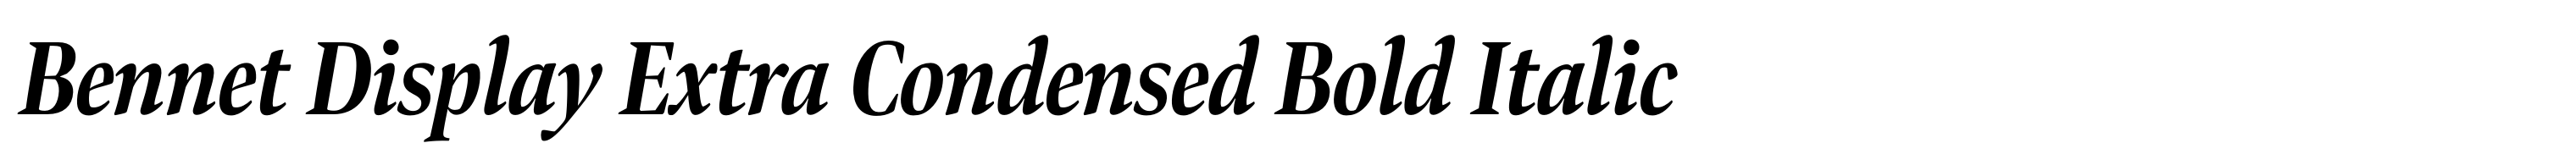 Bennet Display Extra Condensed Bold Italic